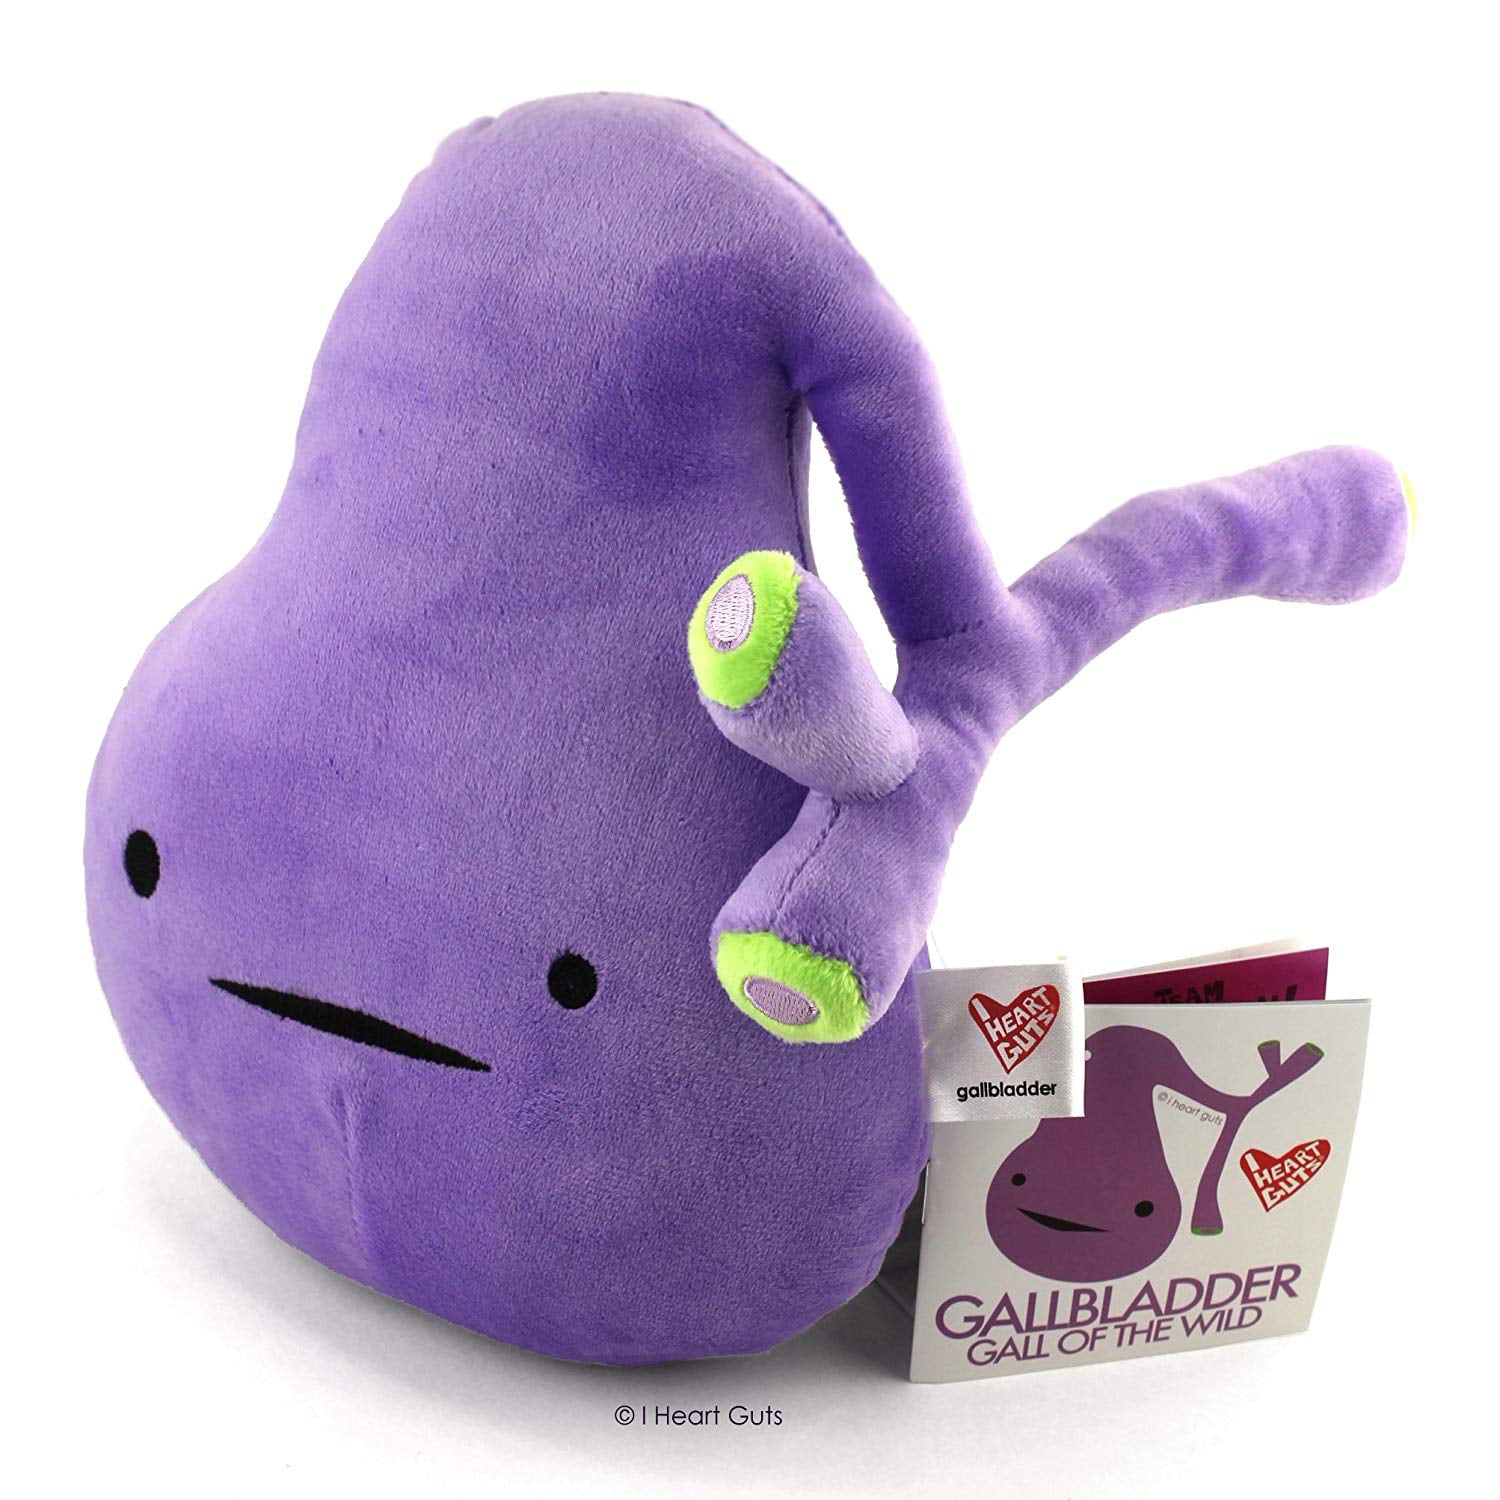 gallbladder stuffed animal